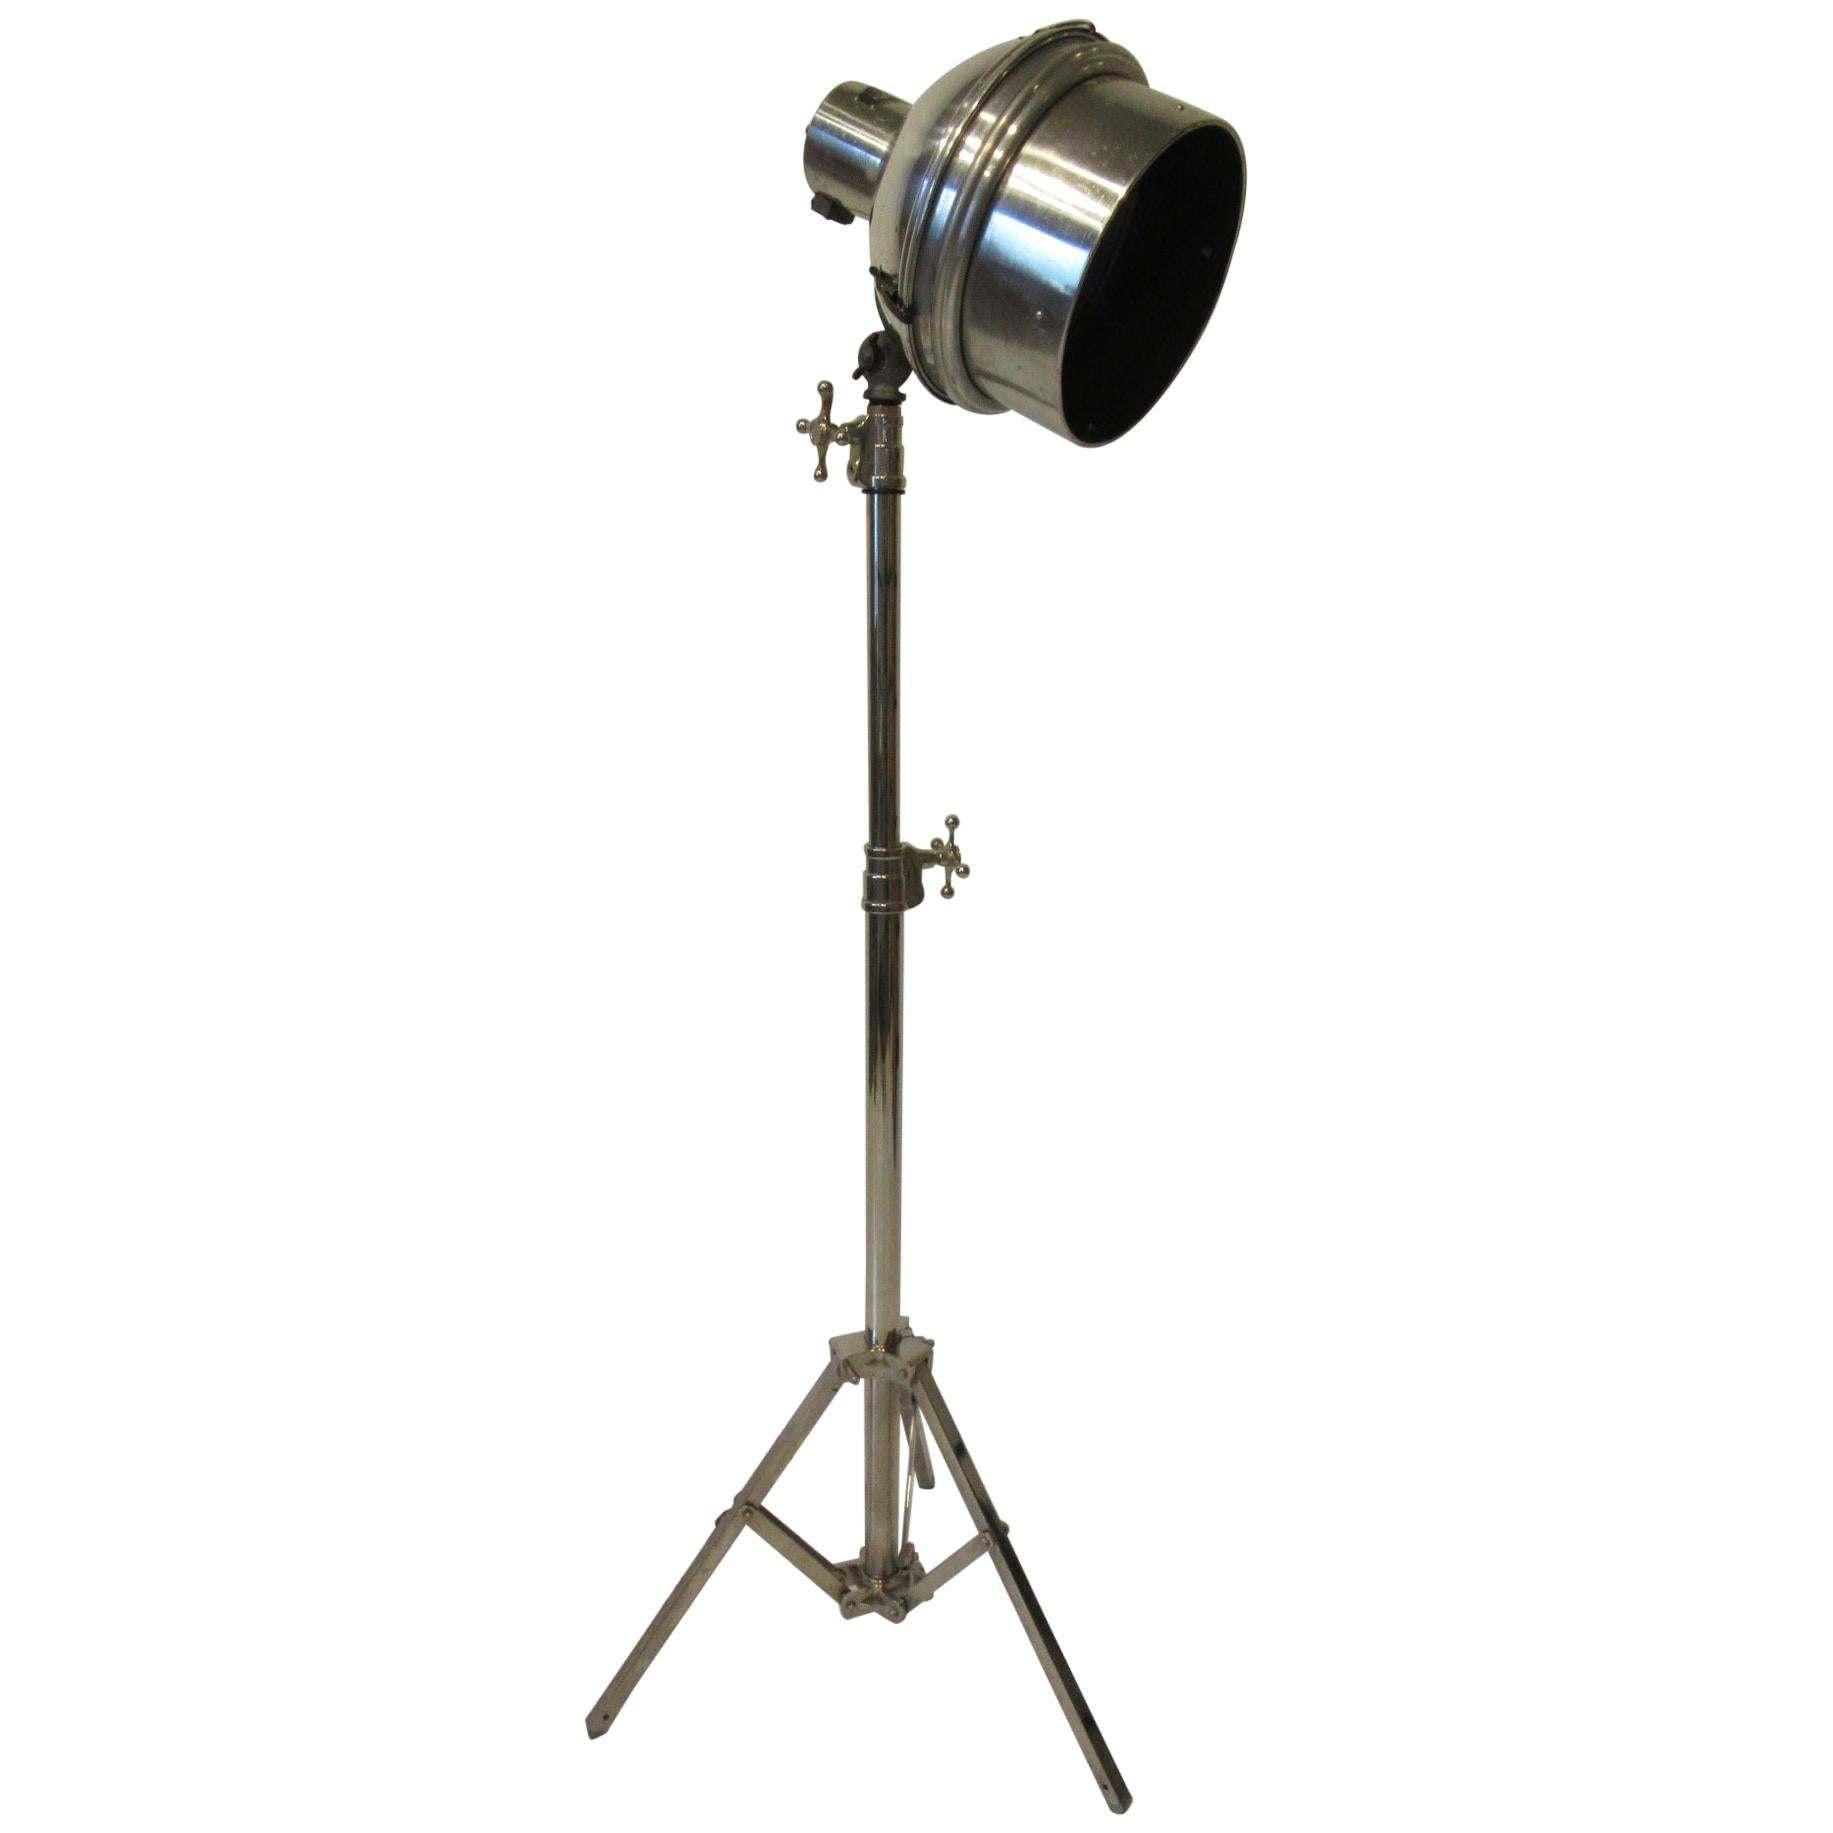 Industrial Chrome / Nickel-Plated Adjustable Floor Lamp